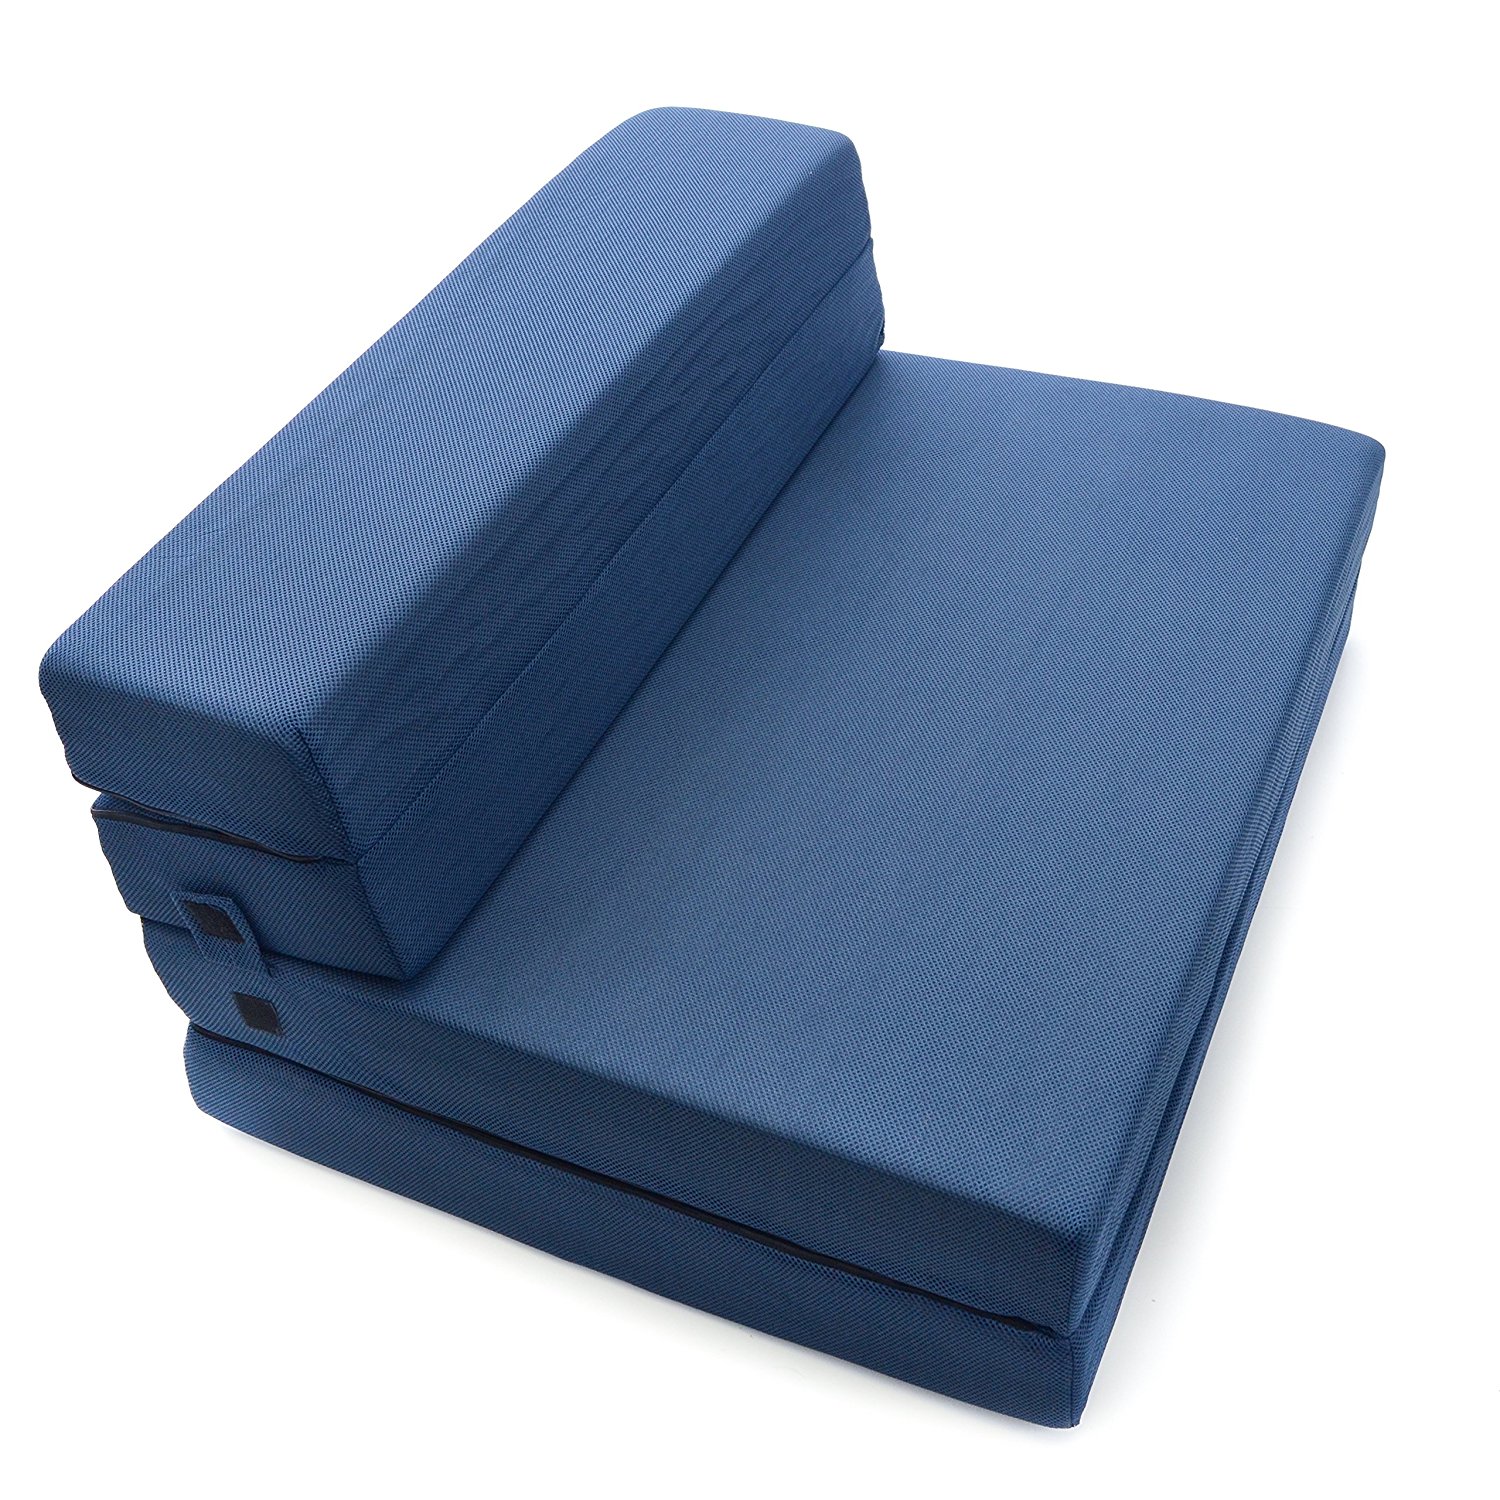 Milliard Tri-Fold Foam Folding Mattress and Sofa Bed for Guests or Floor Mat - Twin XL 78x38x4½